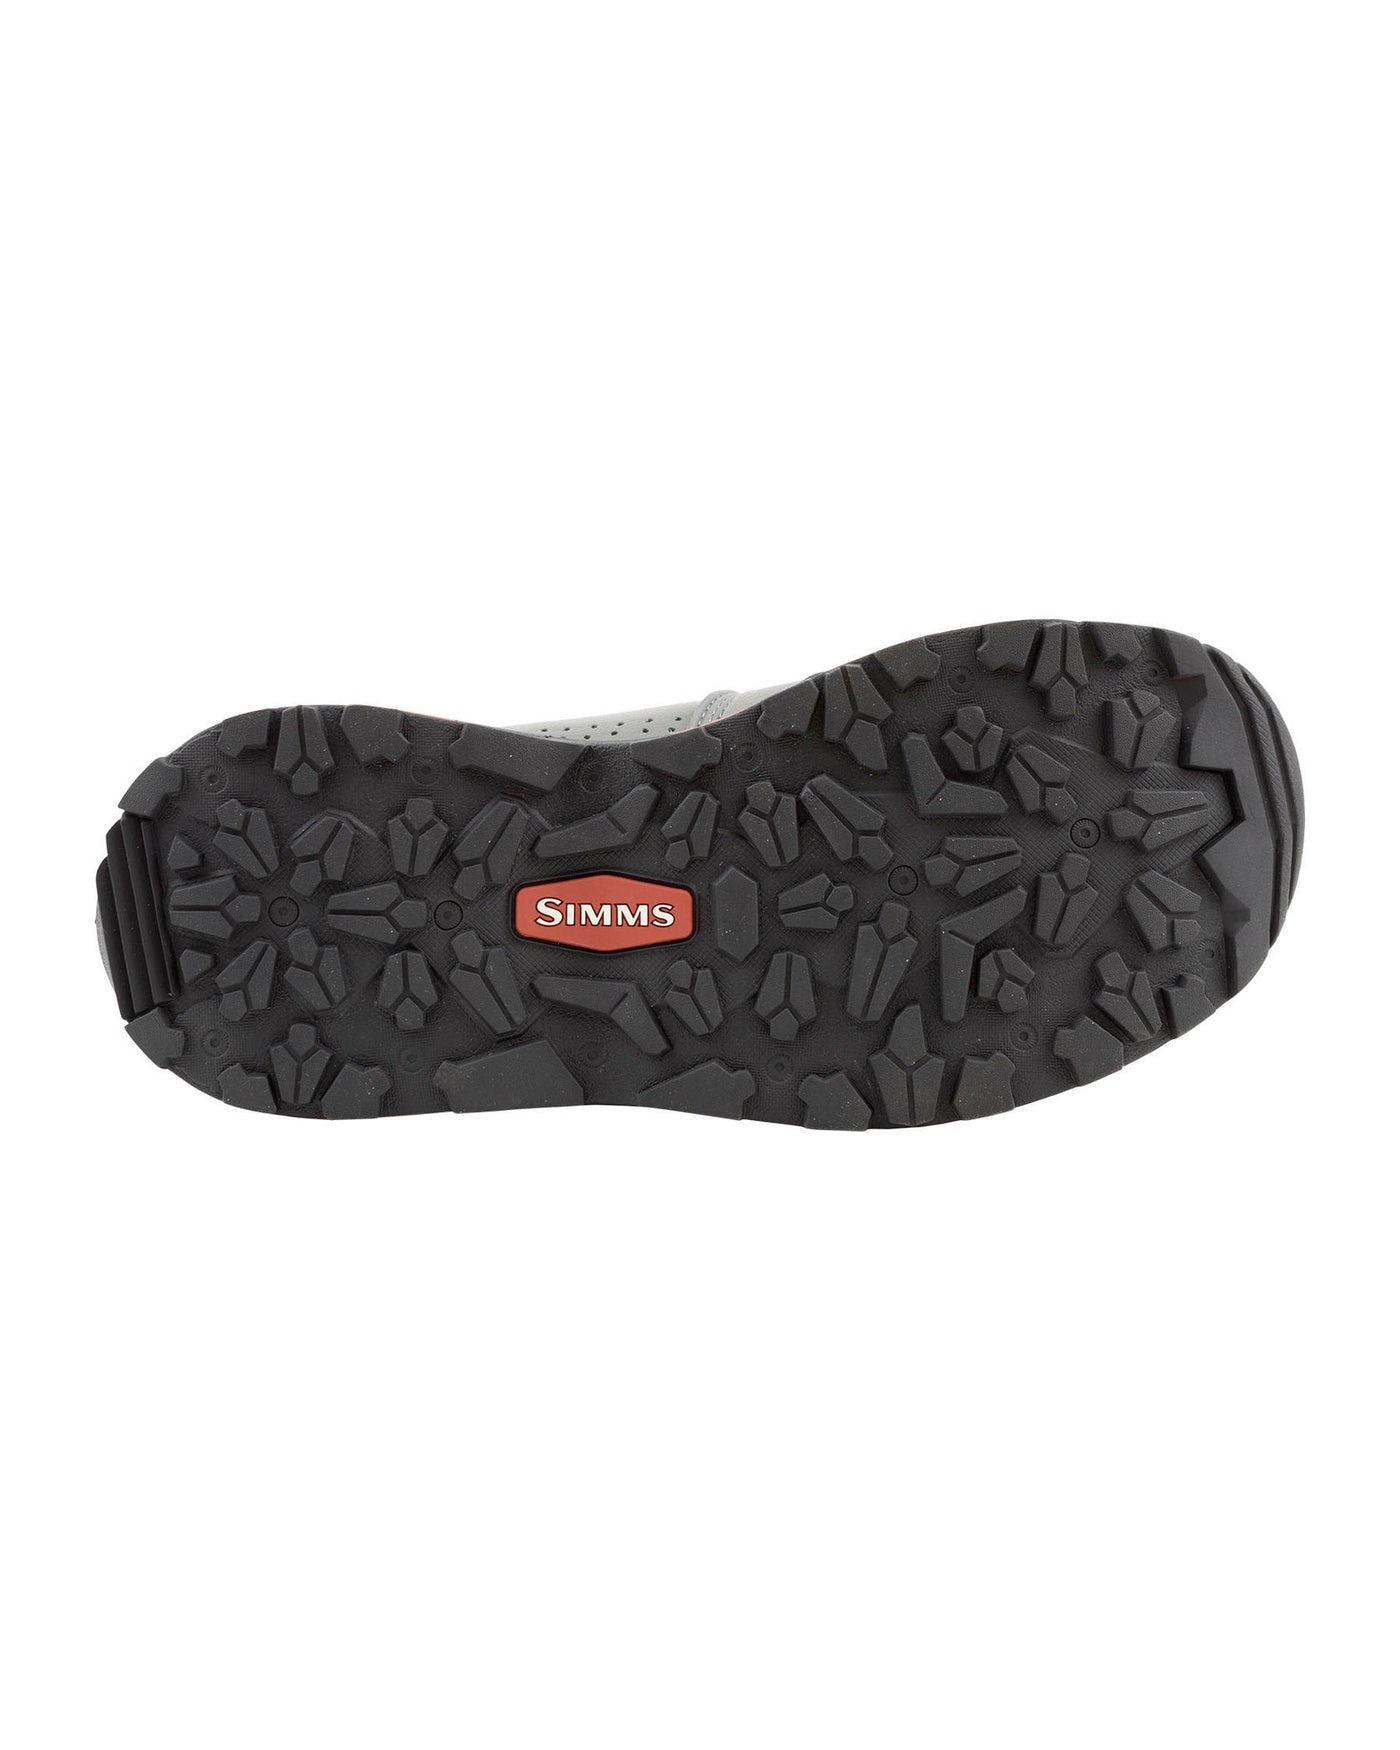 Simms Men's Freestone Wading Boots - Rubber Soles -LAST SEASON MODEL